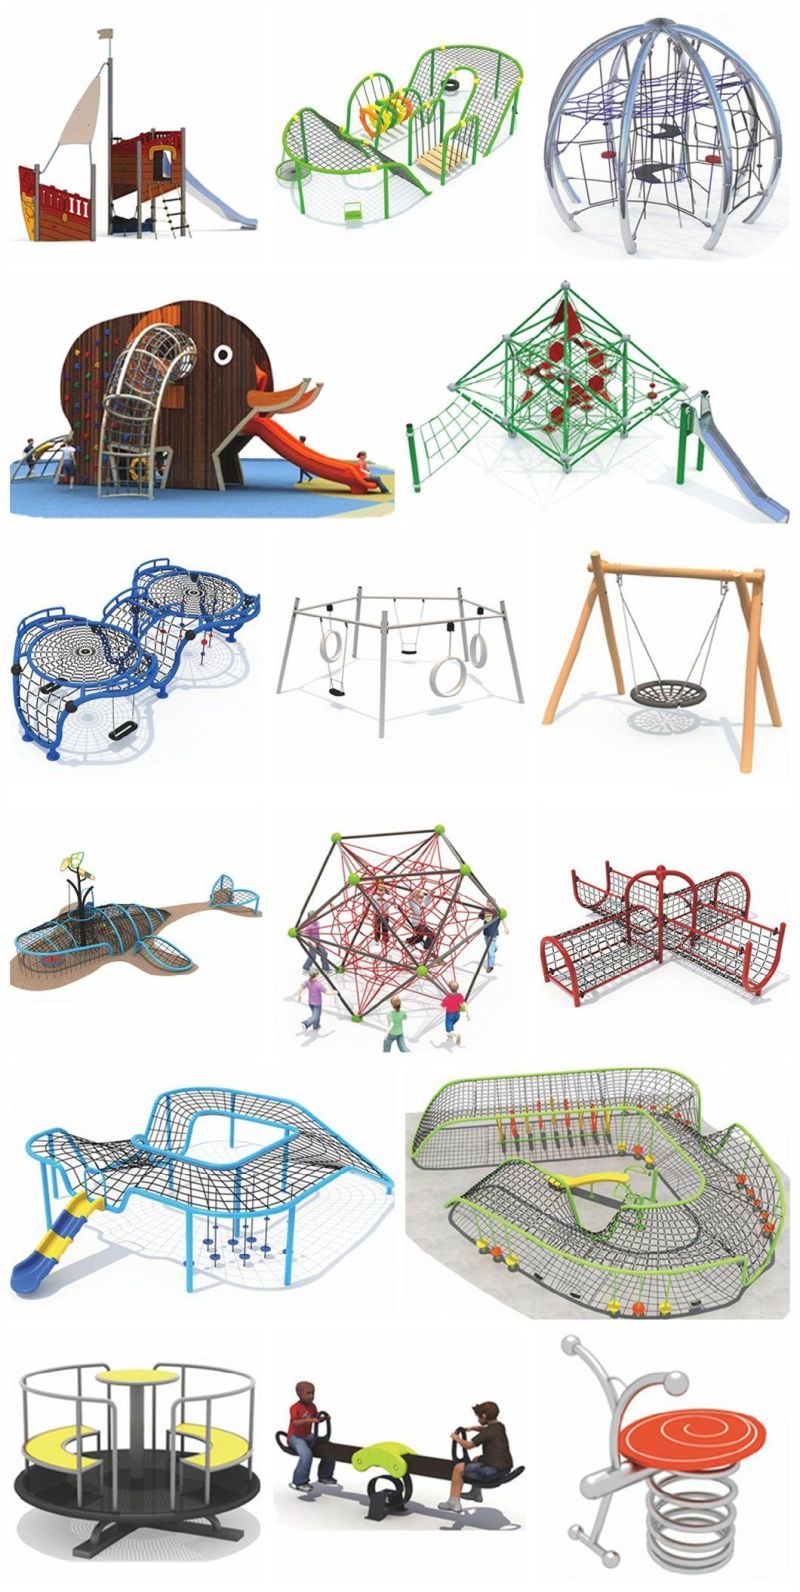 Park Octopus Stainless Steel Slide Community Kids Playground Equipment Fb19